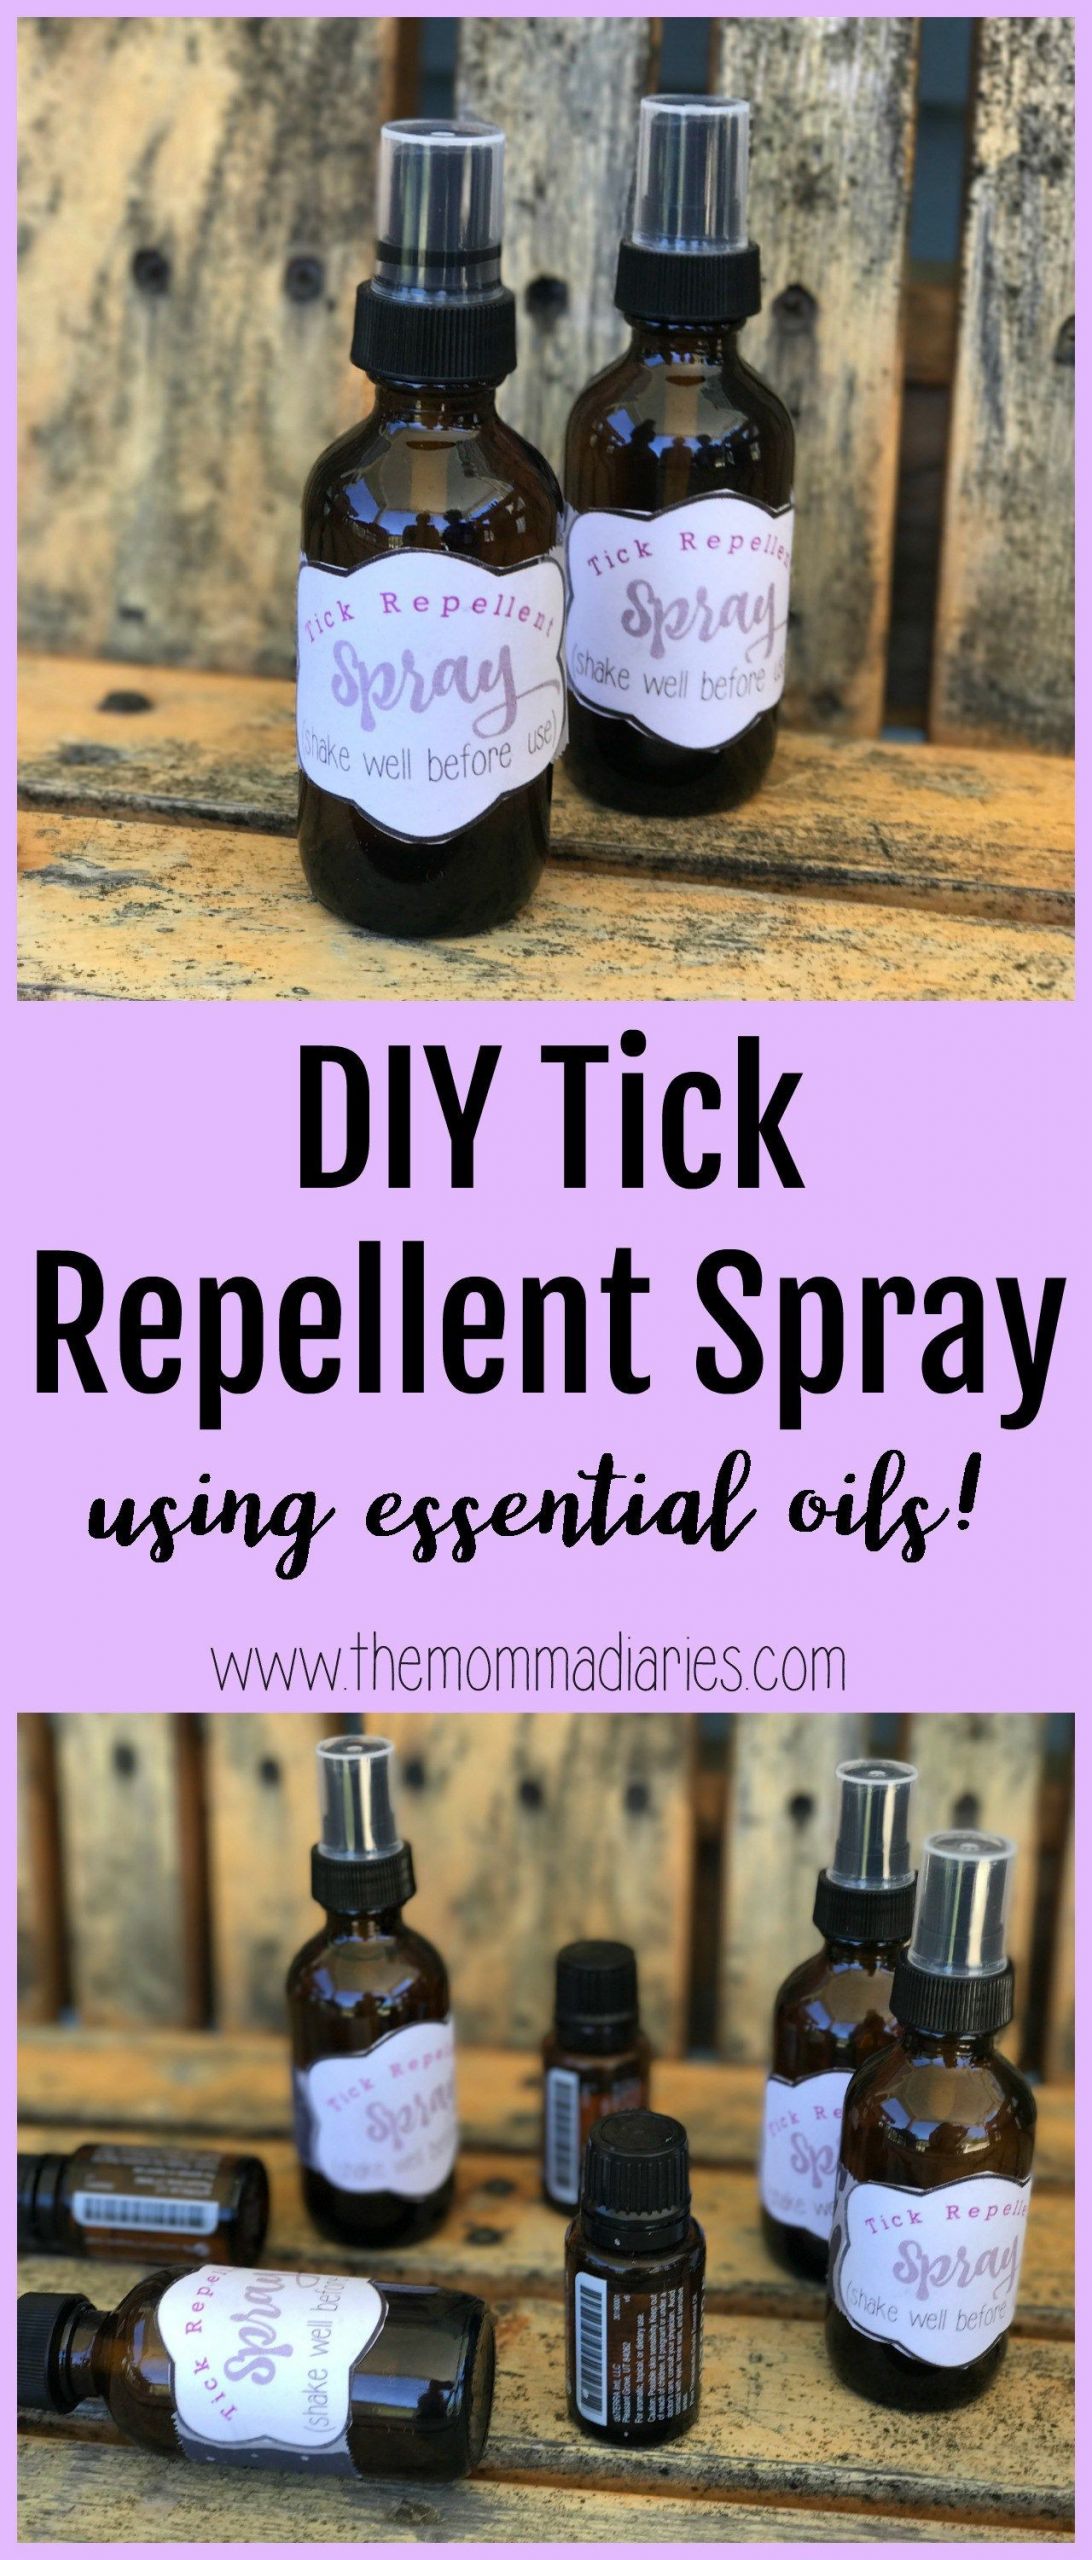 DIY Dog Repellent Spray
 DIY Tick Repellent Spray Using Essential Oils